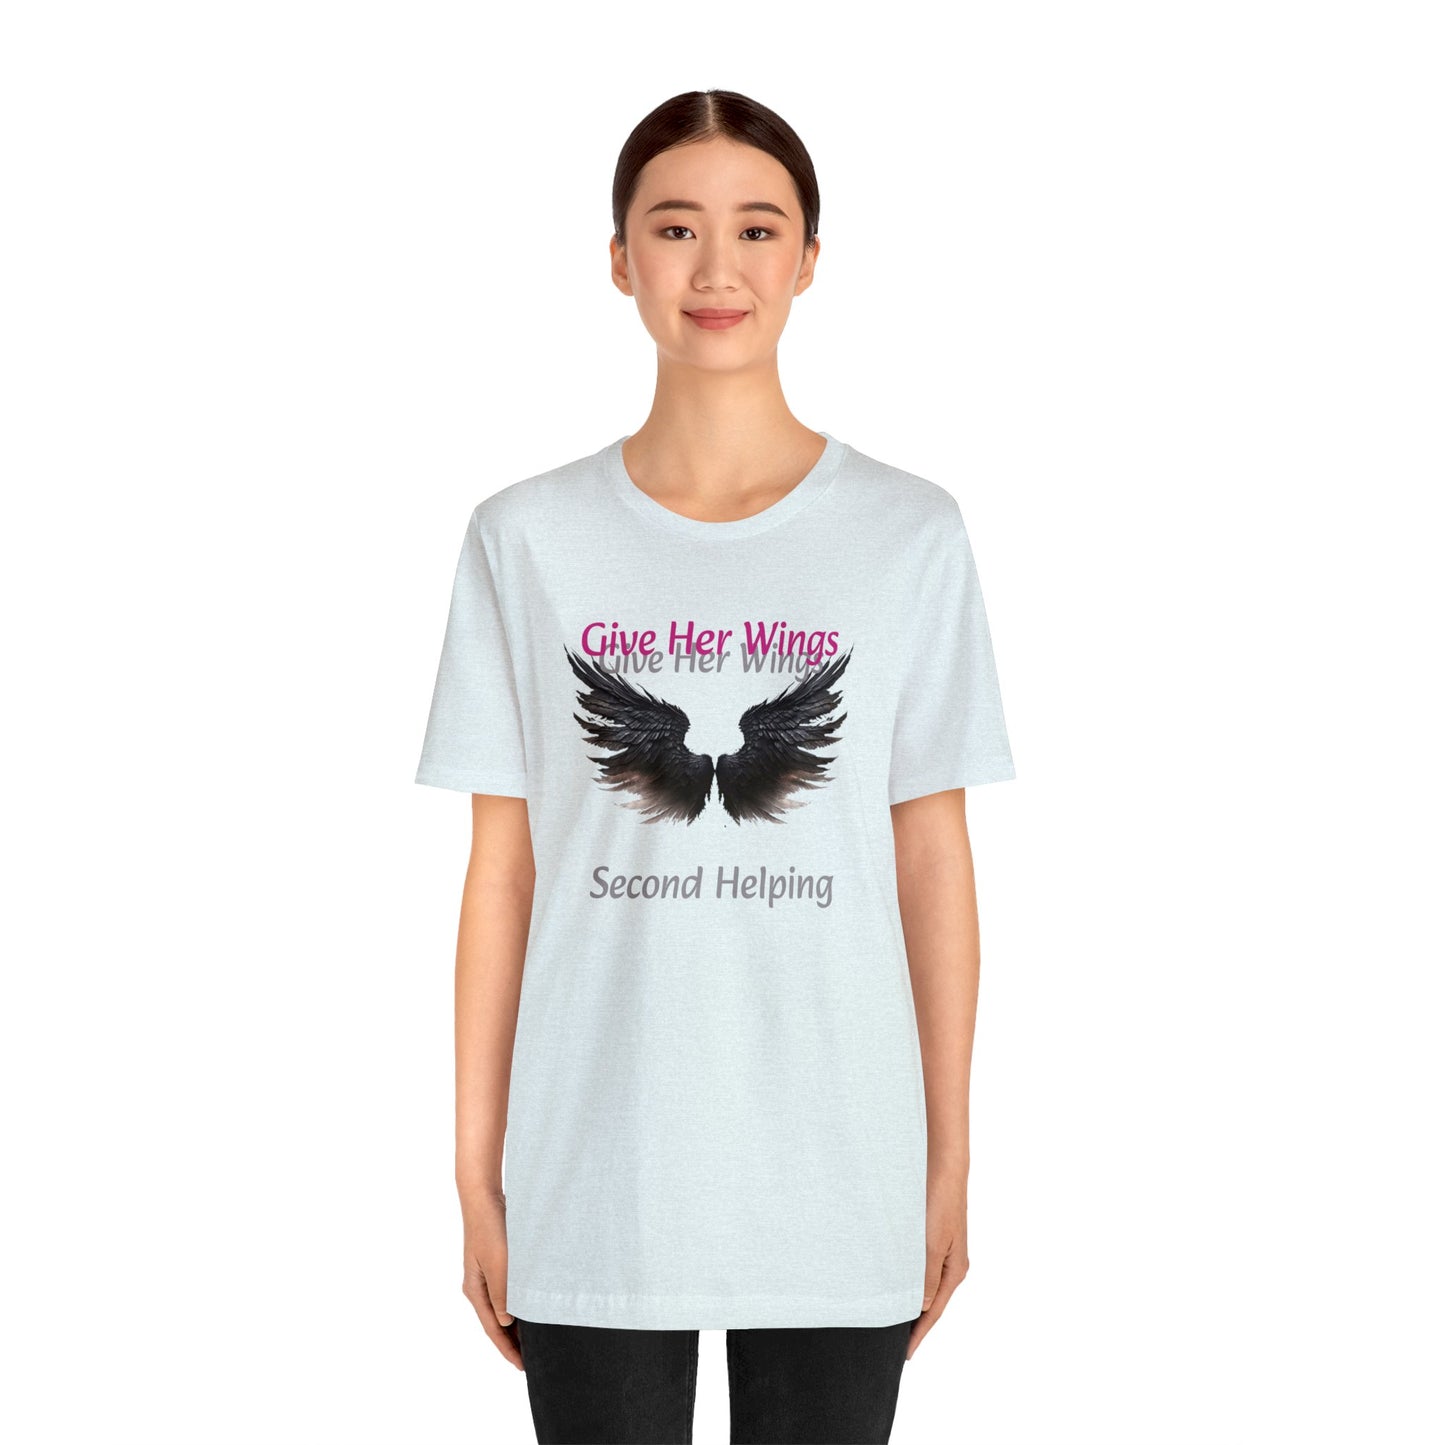 Dollar Kidd - Give Her Wings Unisex Jersey Short Sleeve Tee